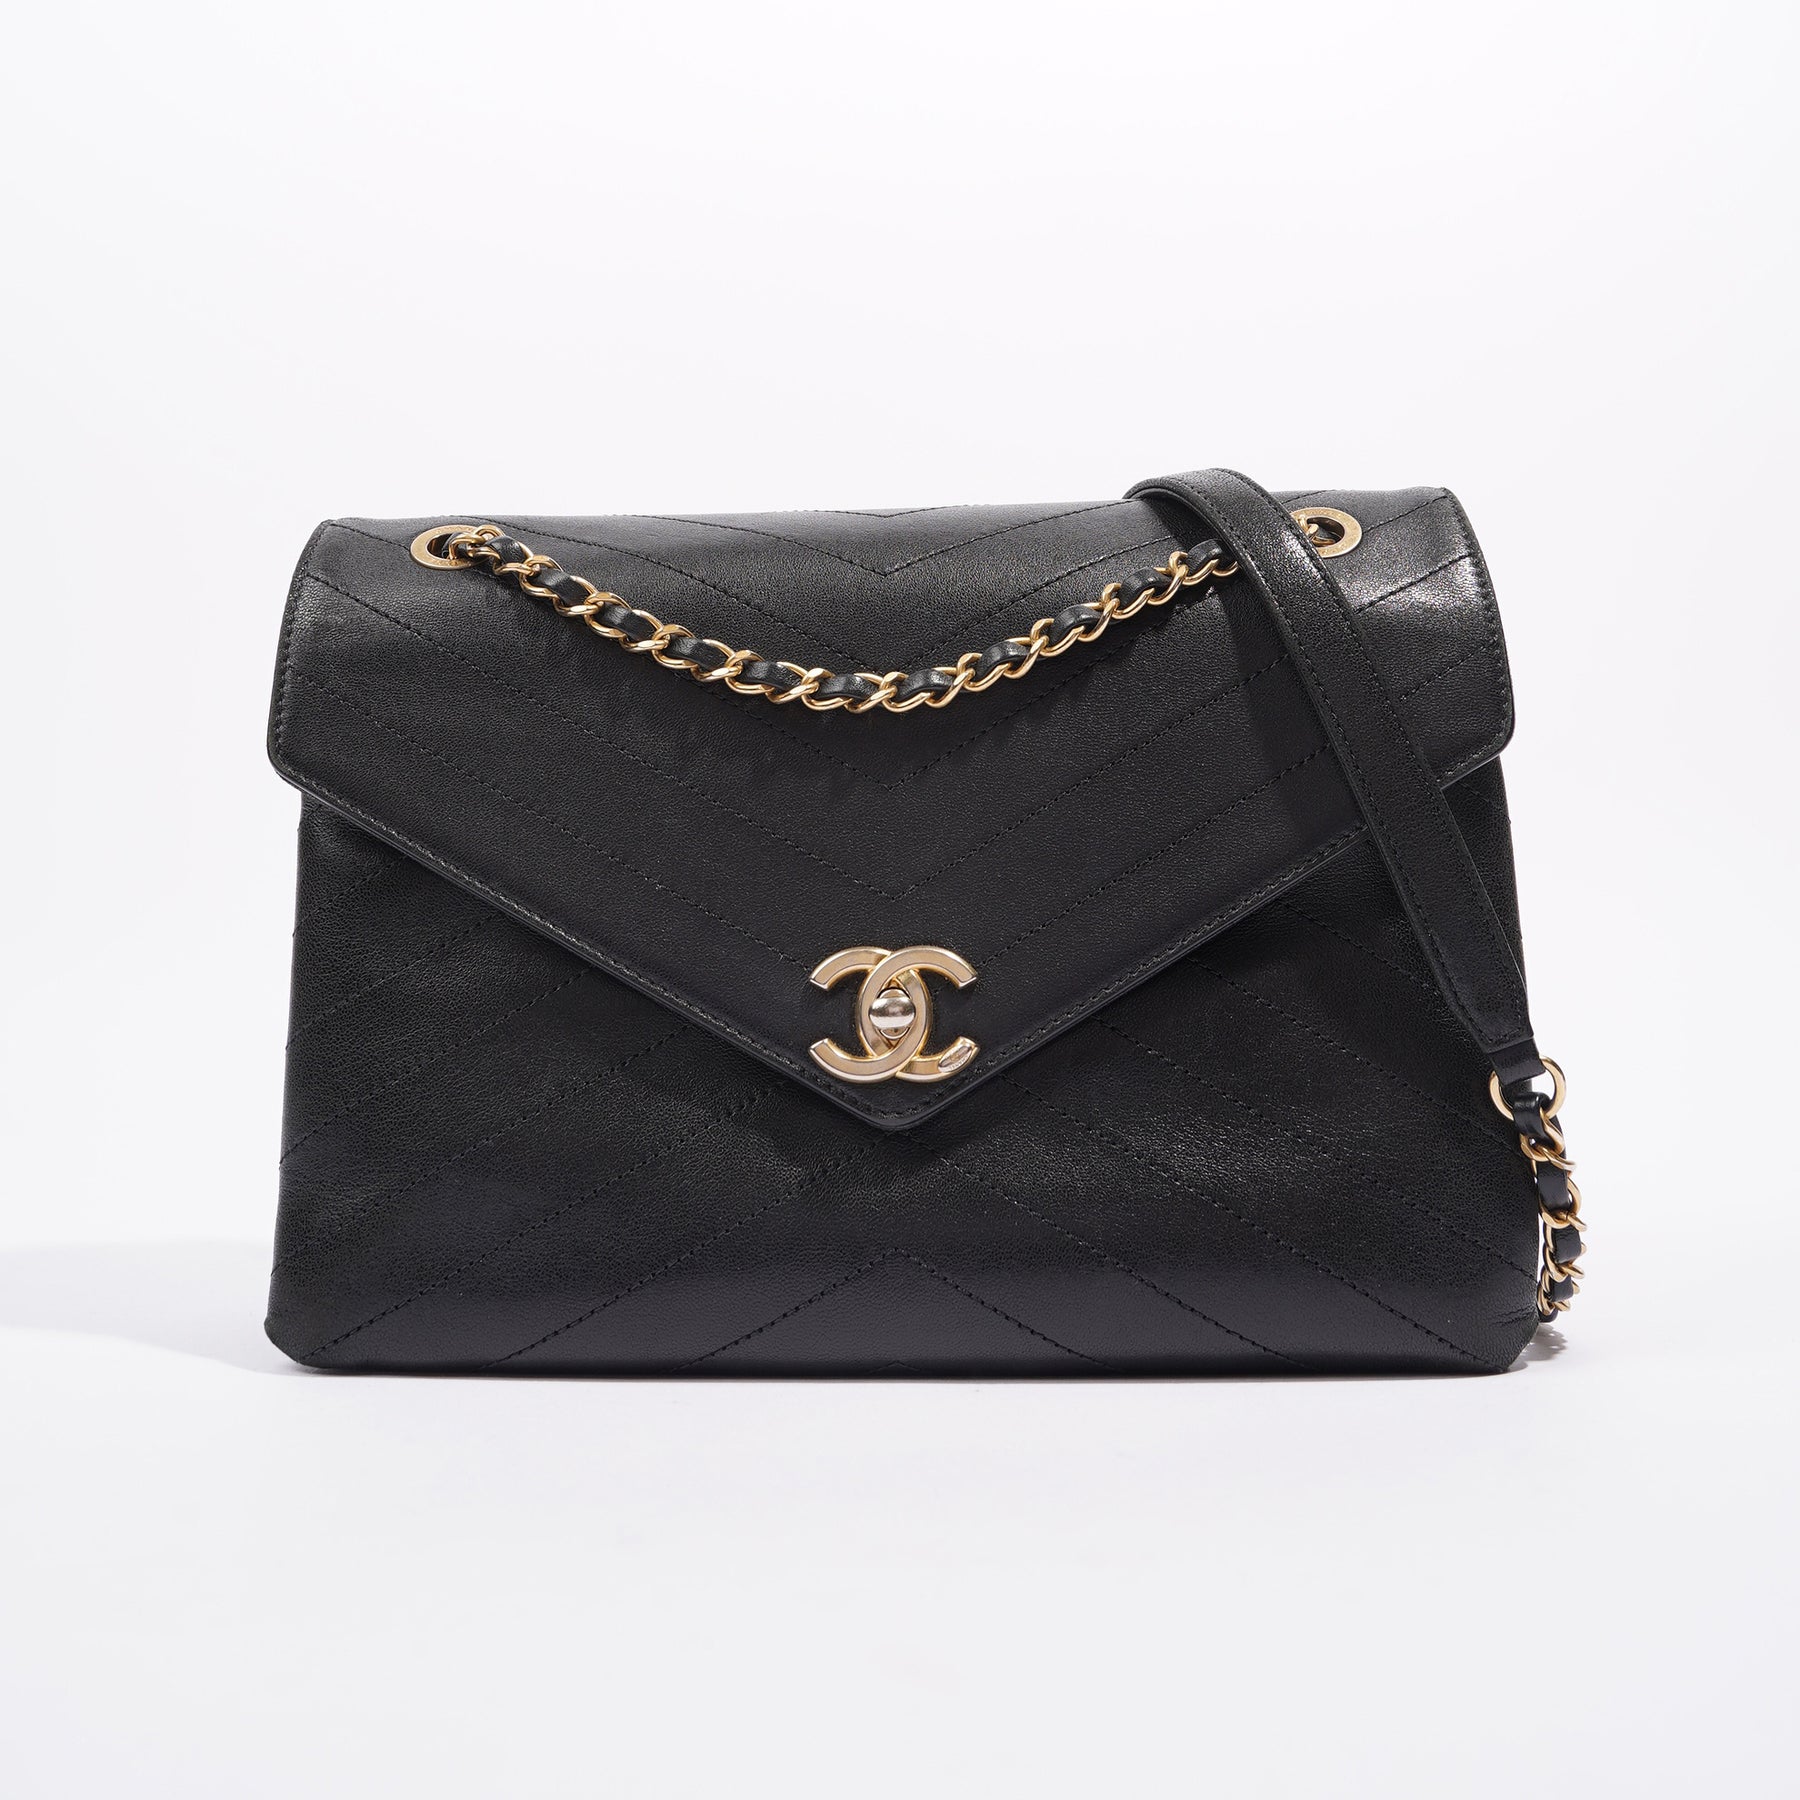 Chanel pouch, Bags, Fashion designer handbags